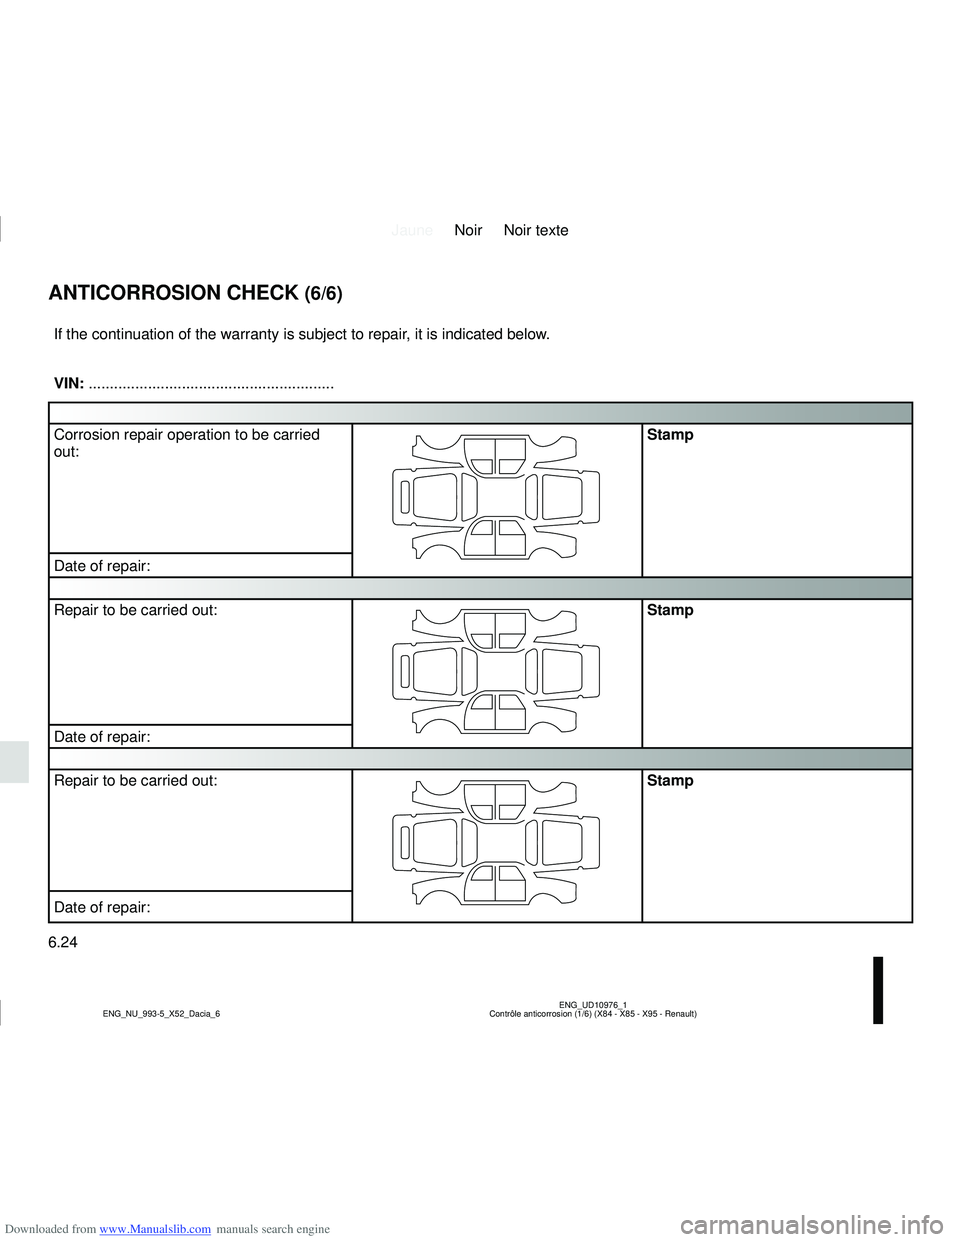 DACIA LOGAN 2021 Manual PDF Downloaded from www.Manualslib.com manuals search engine JauneNoir Noir texte
6.24
ENG_UD10976_1
Contrôle anticorrosion (1/6) (X84 - X85 - X95 - Renault)
ENG_NU_993-5_X52_Dacia_6
ANTICORROSION CHECK 